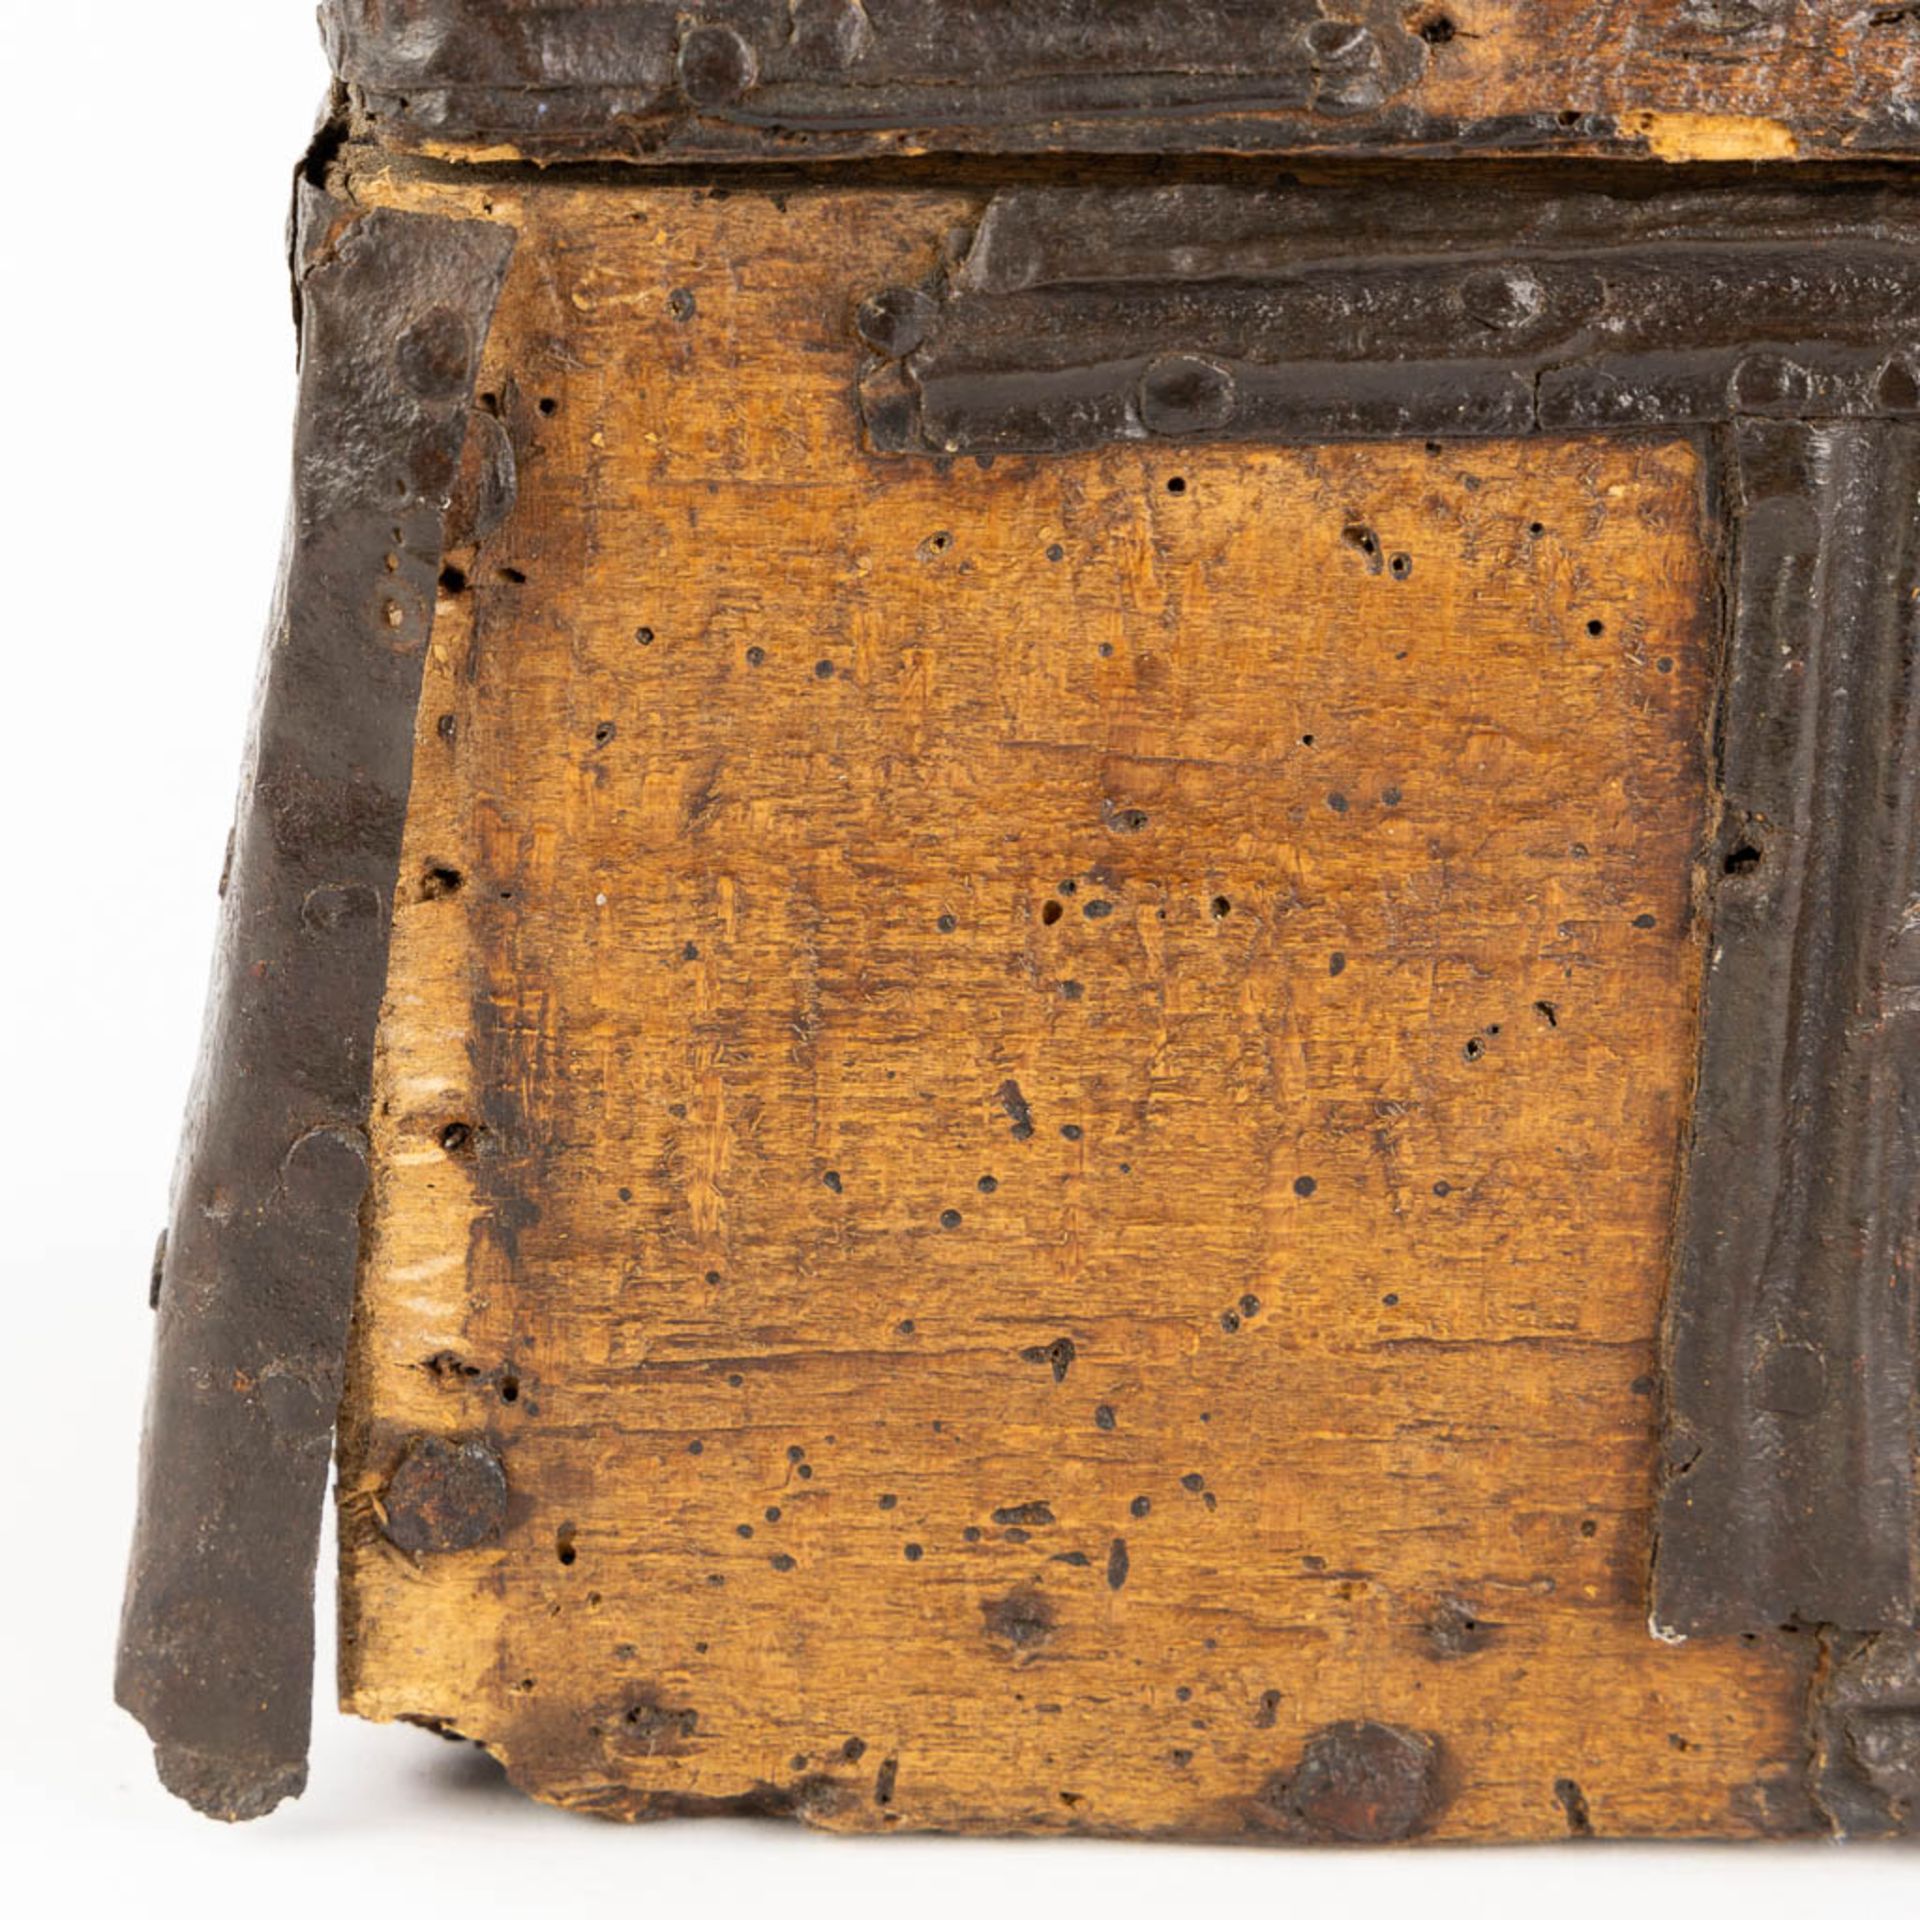 An antique money box or storage chest, wood and wrought iron, 16th/17th C. (L:20 x W:36 x H:22 cm) - Bild 14 aus 14